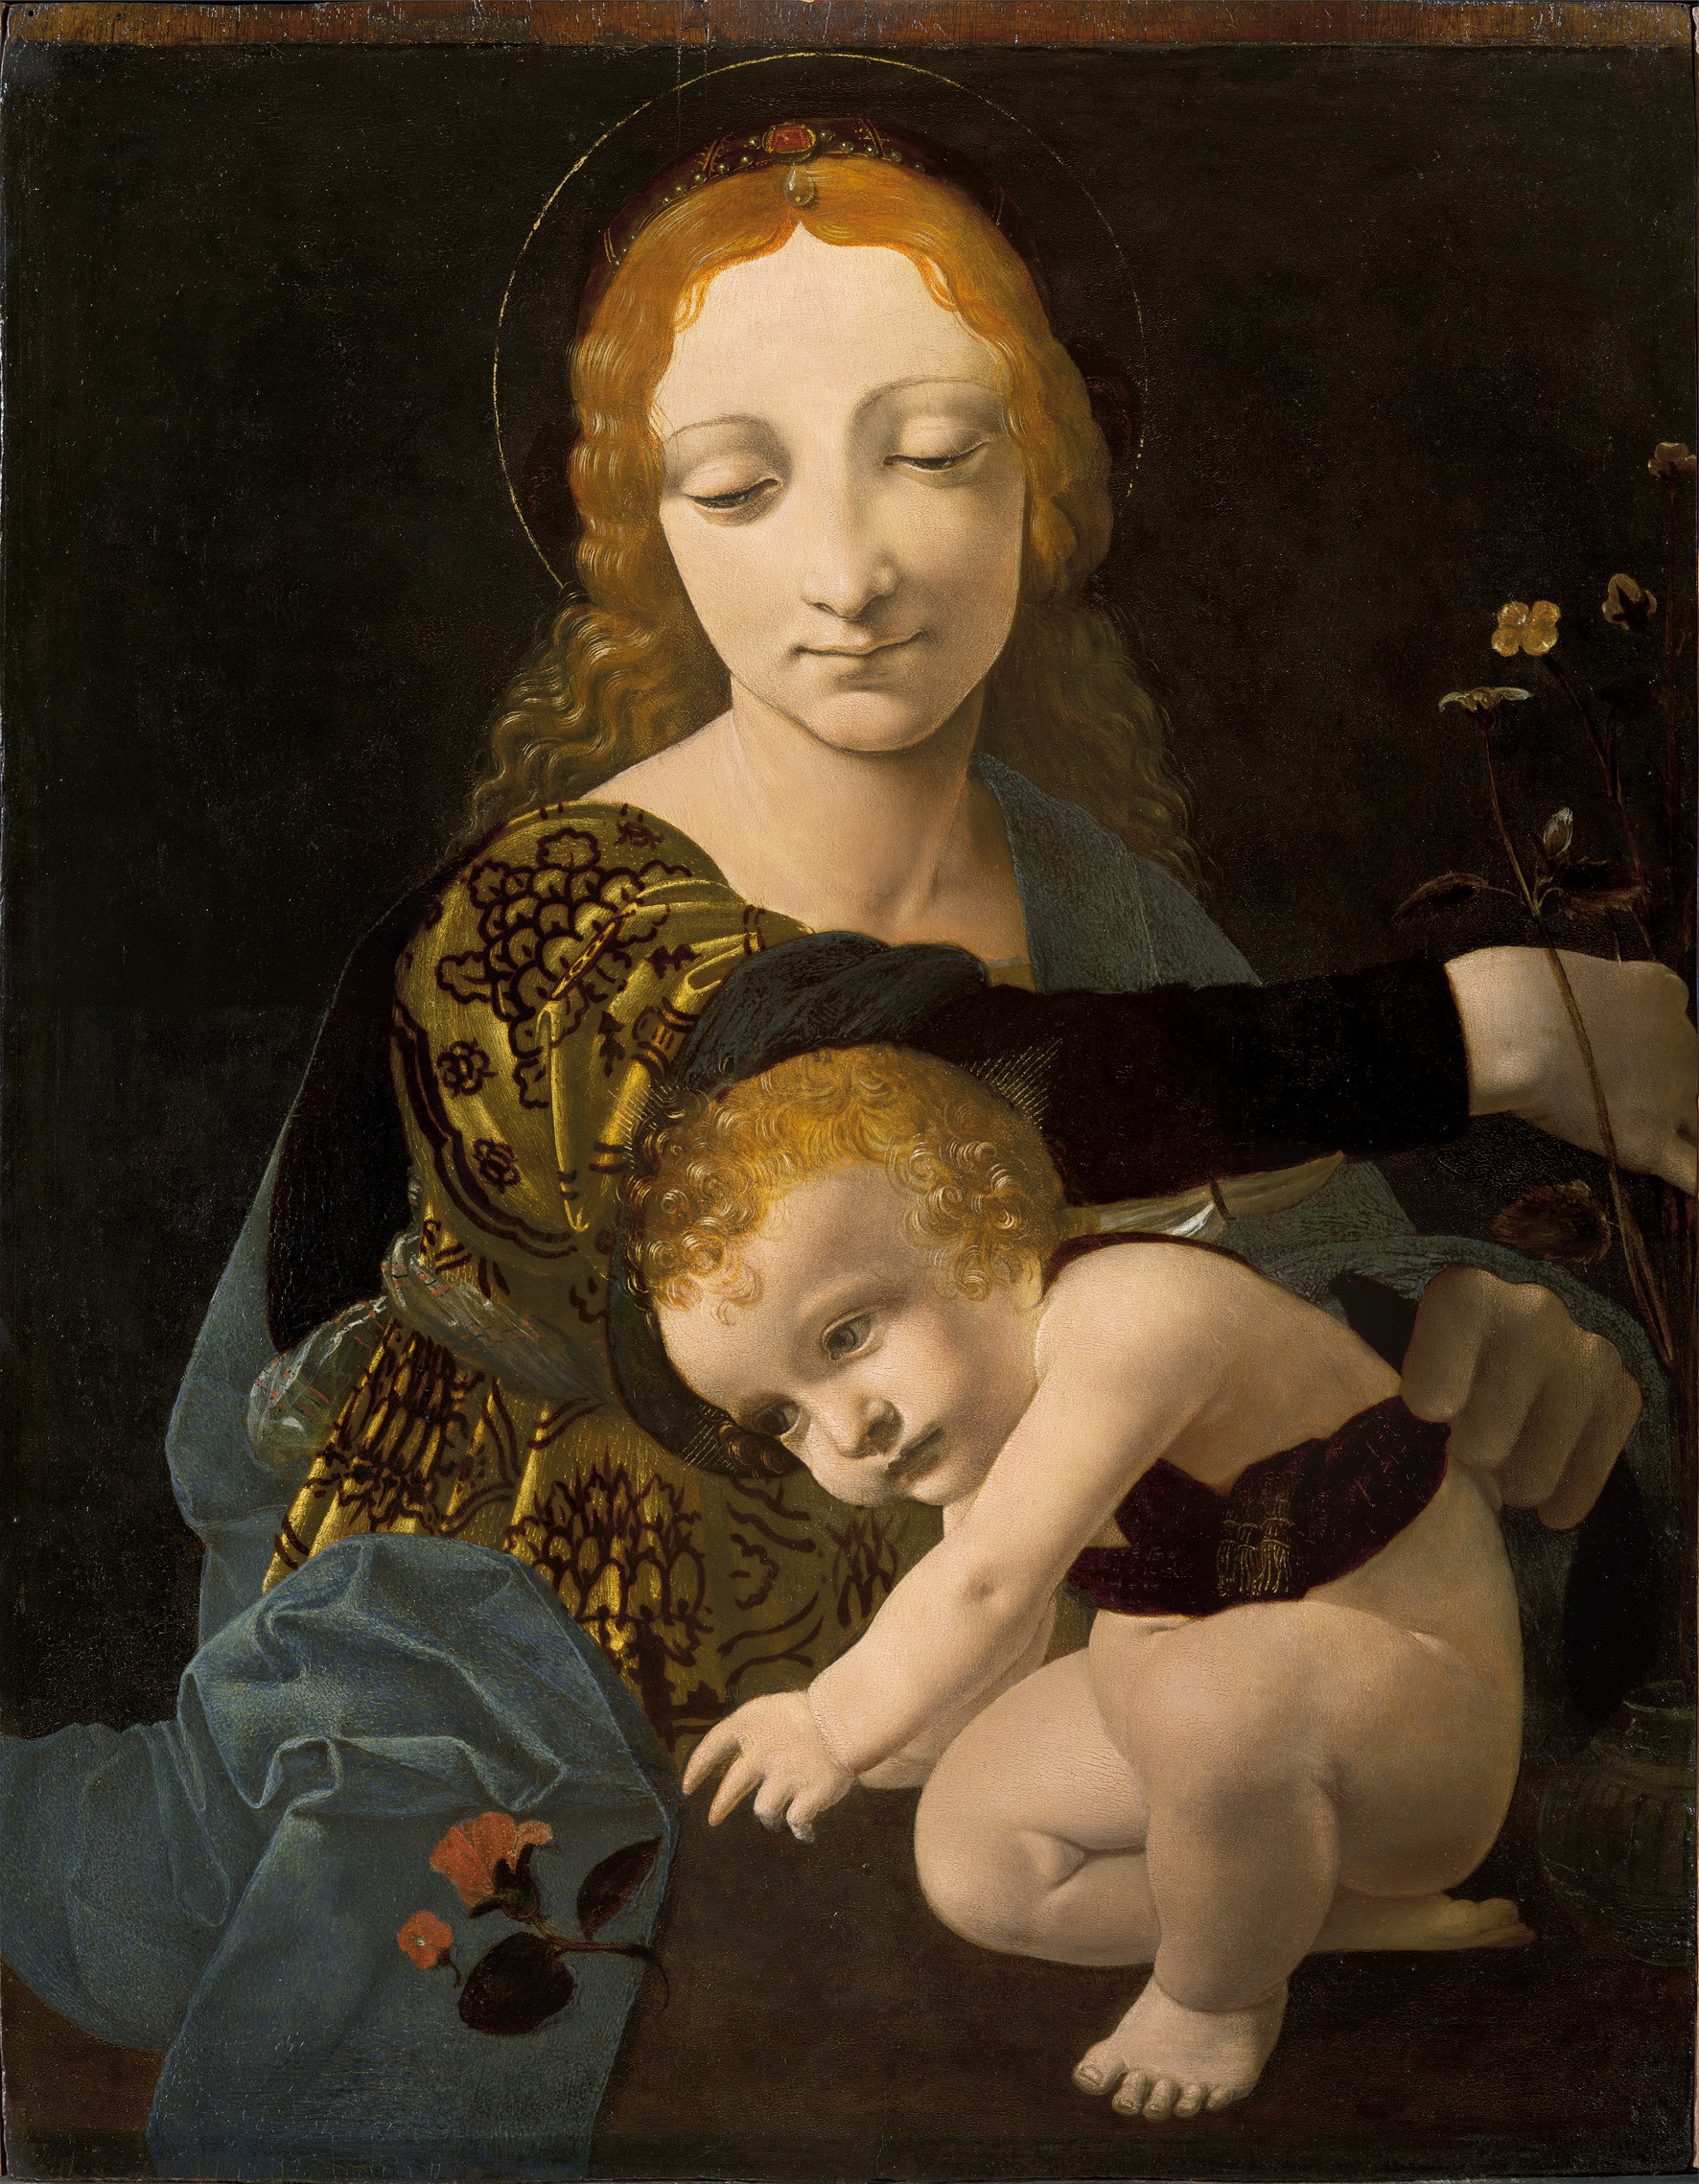 Bakire ve Bebek by Giovanni Antonio Boltraffio - 1495 civarı - 45,5 cm x 35,6 cm 